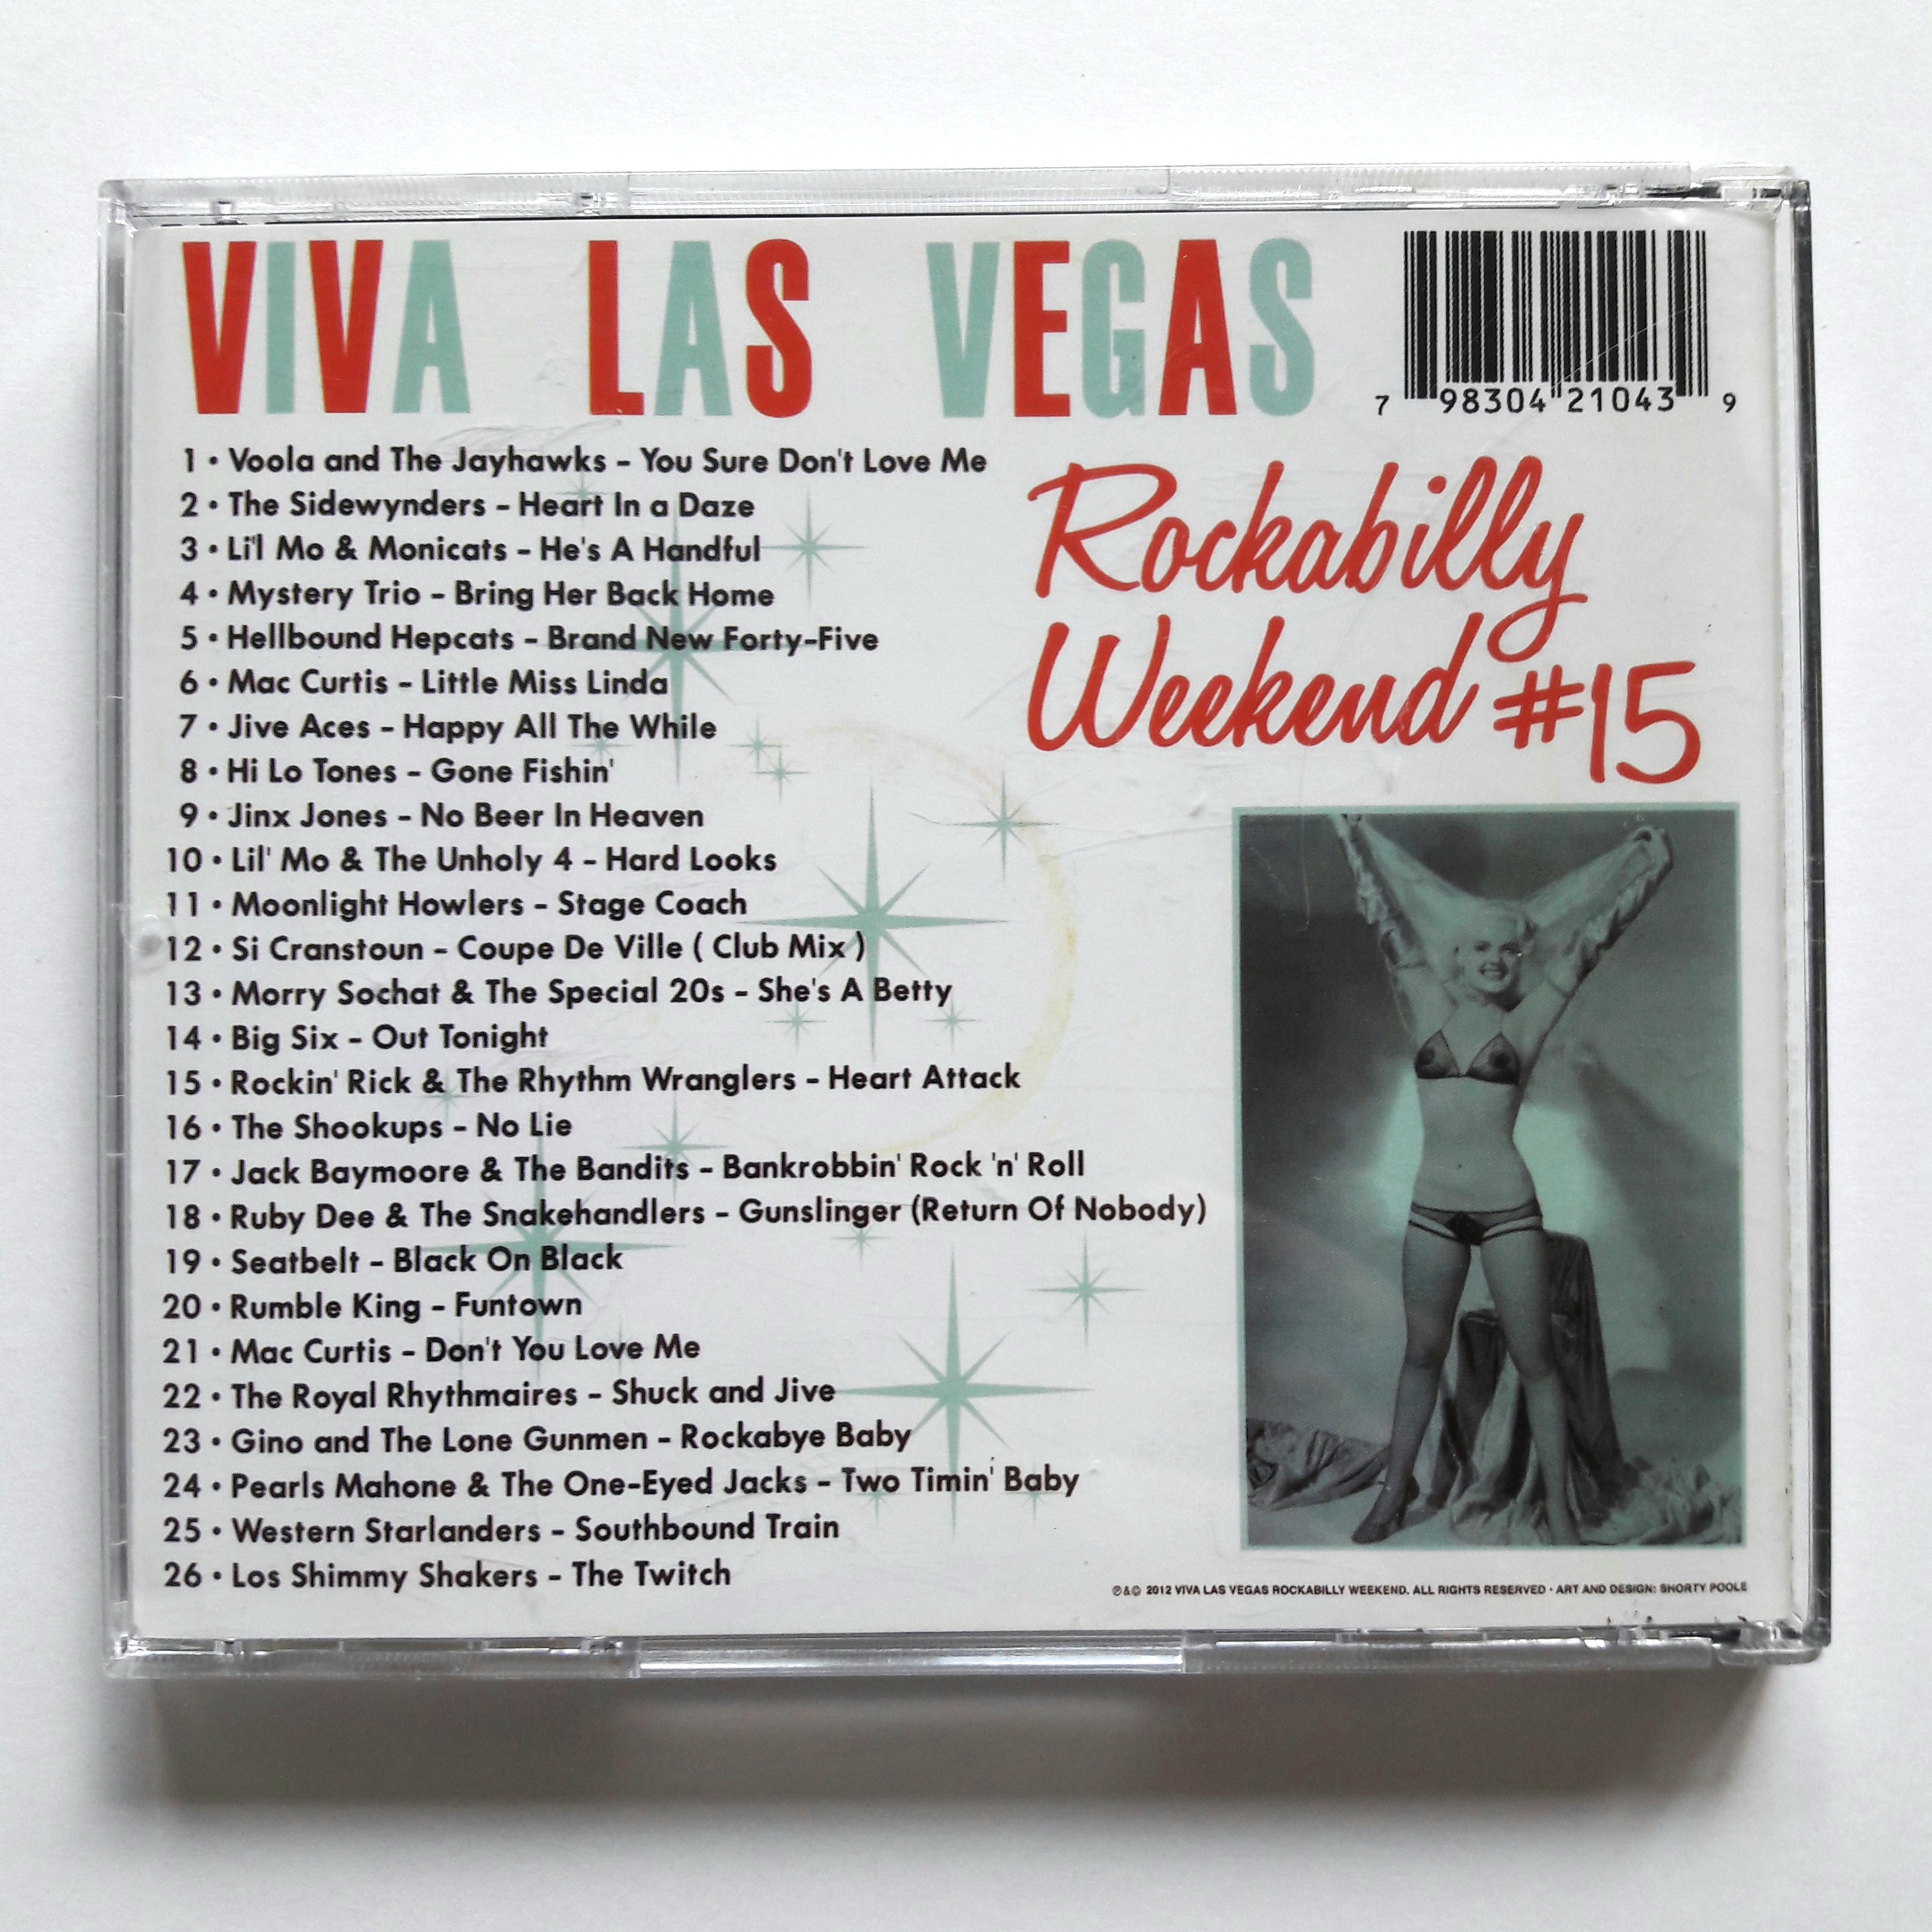 Viva Las Vegas - Rockabilly Weekend # 15